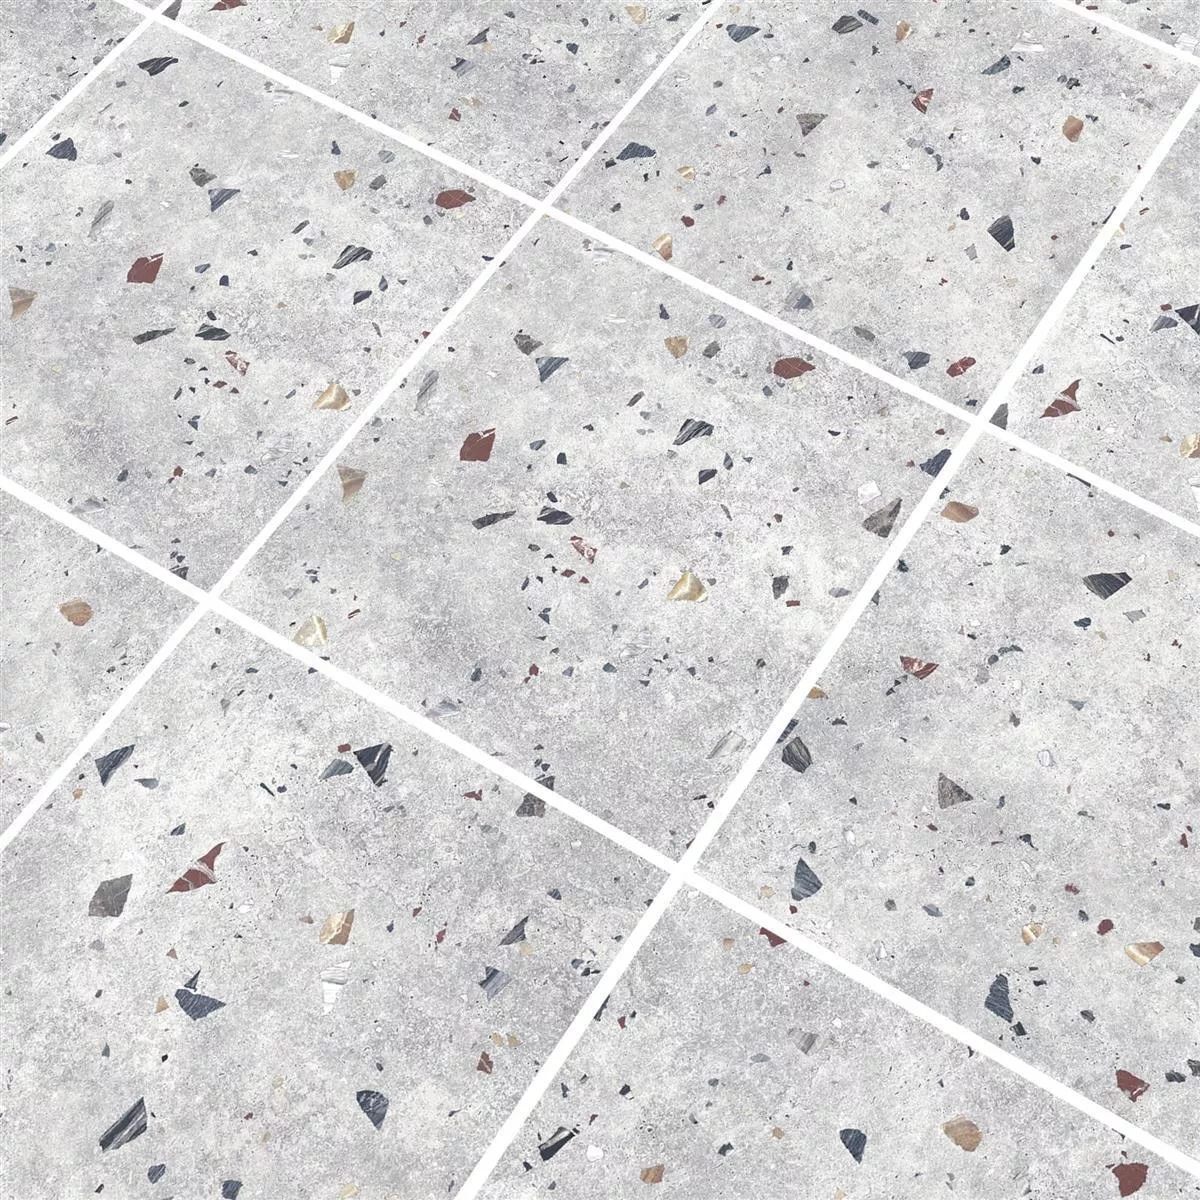 Sample Floor Tiles Moderno 66x66cm Silver Colored